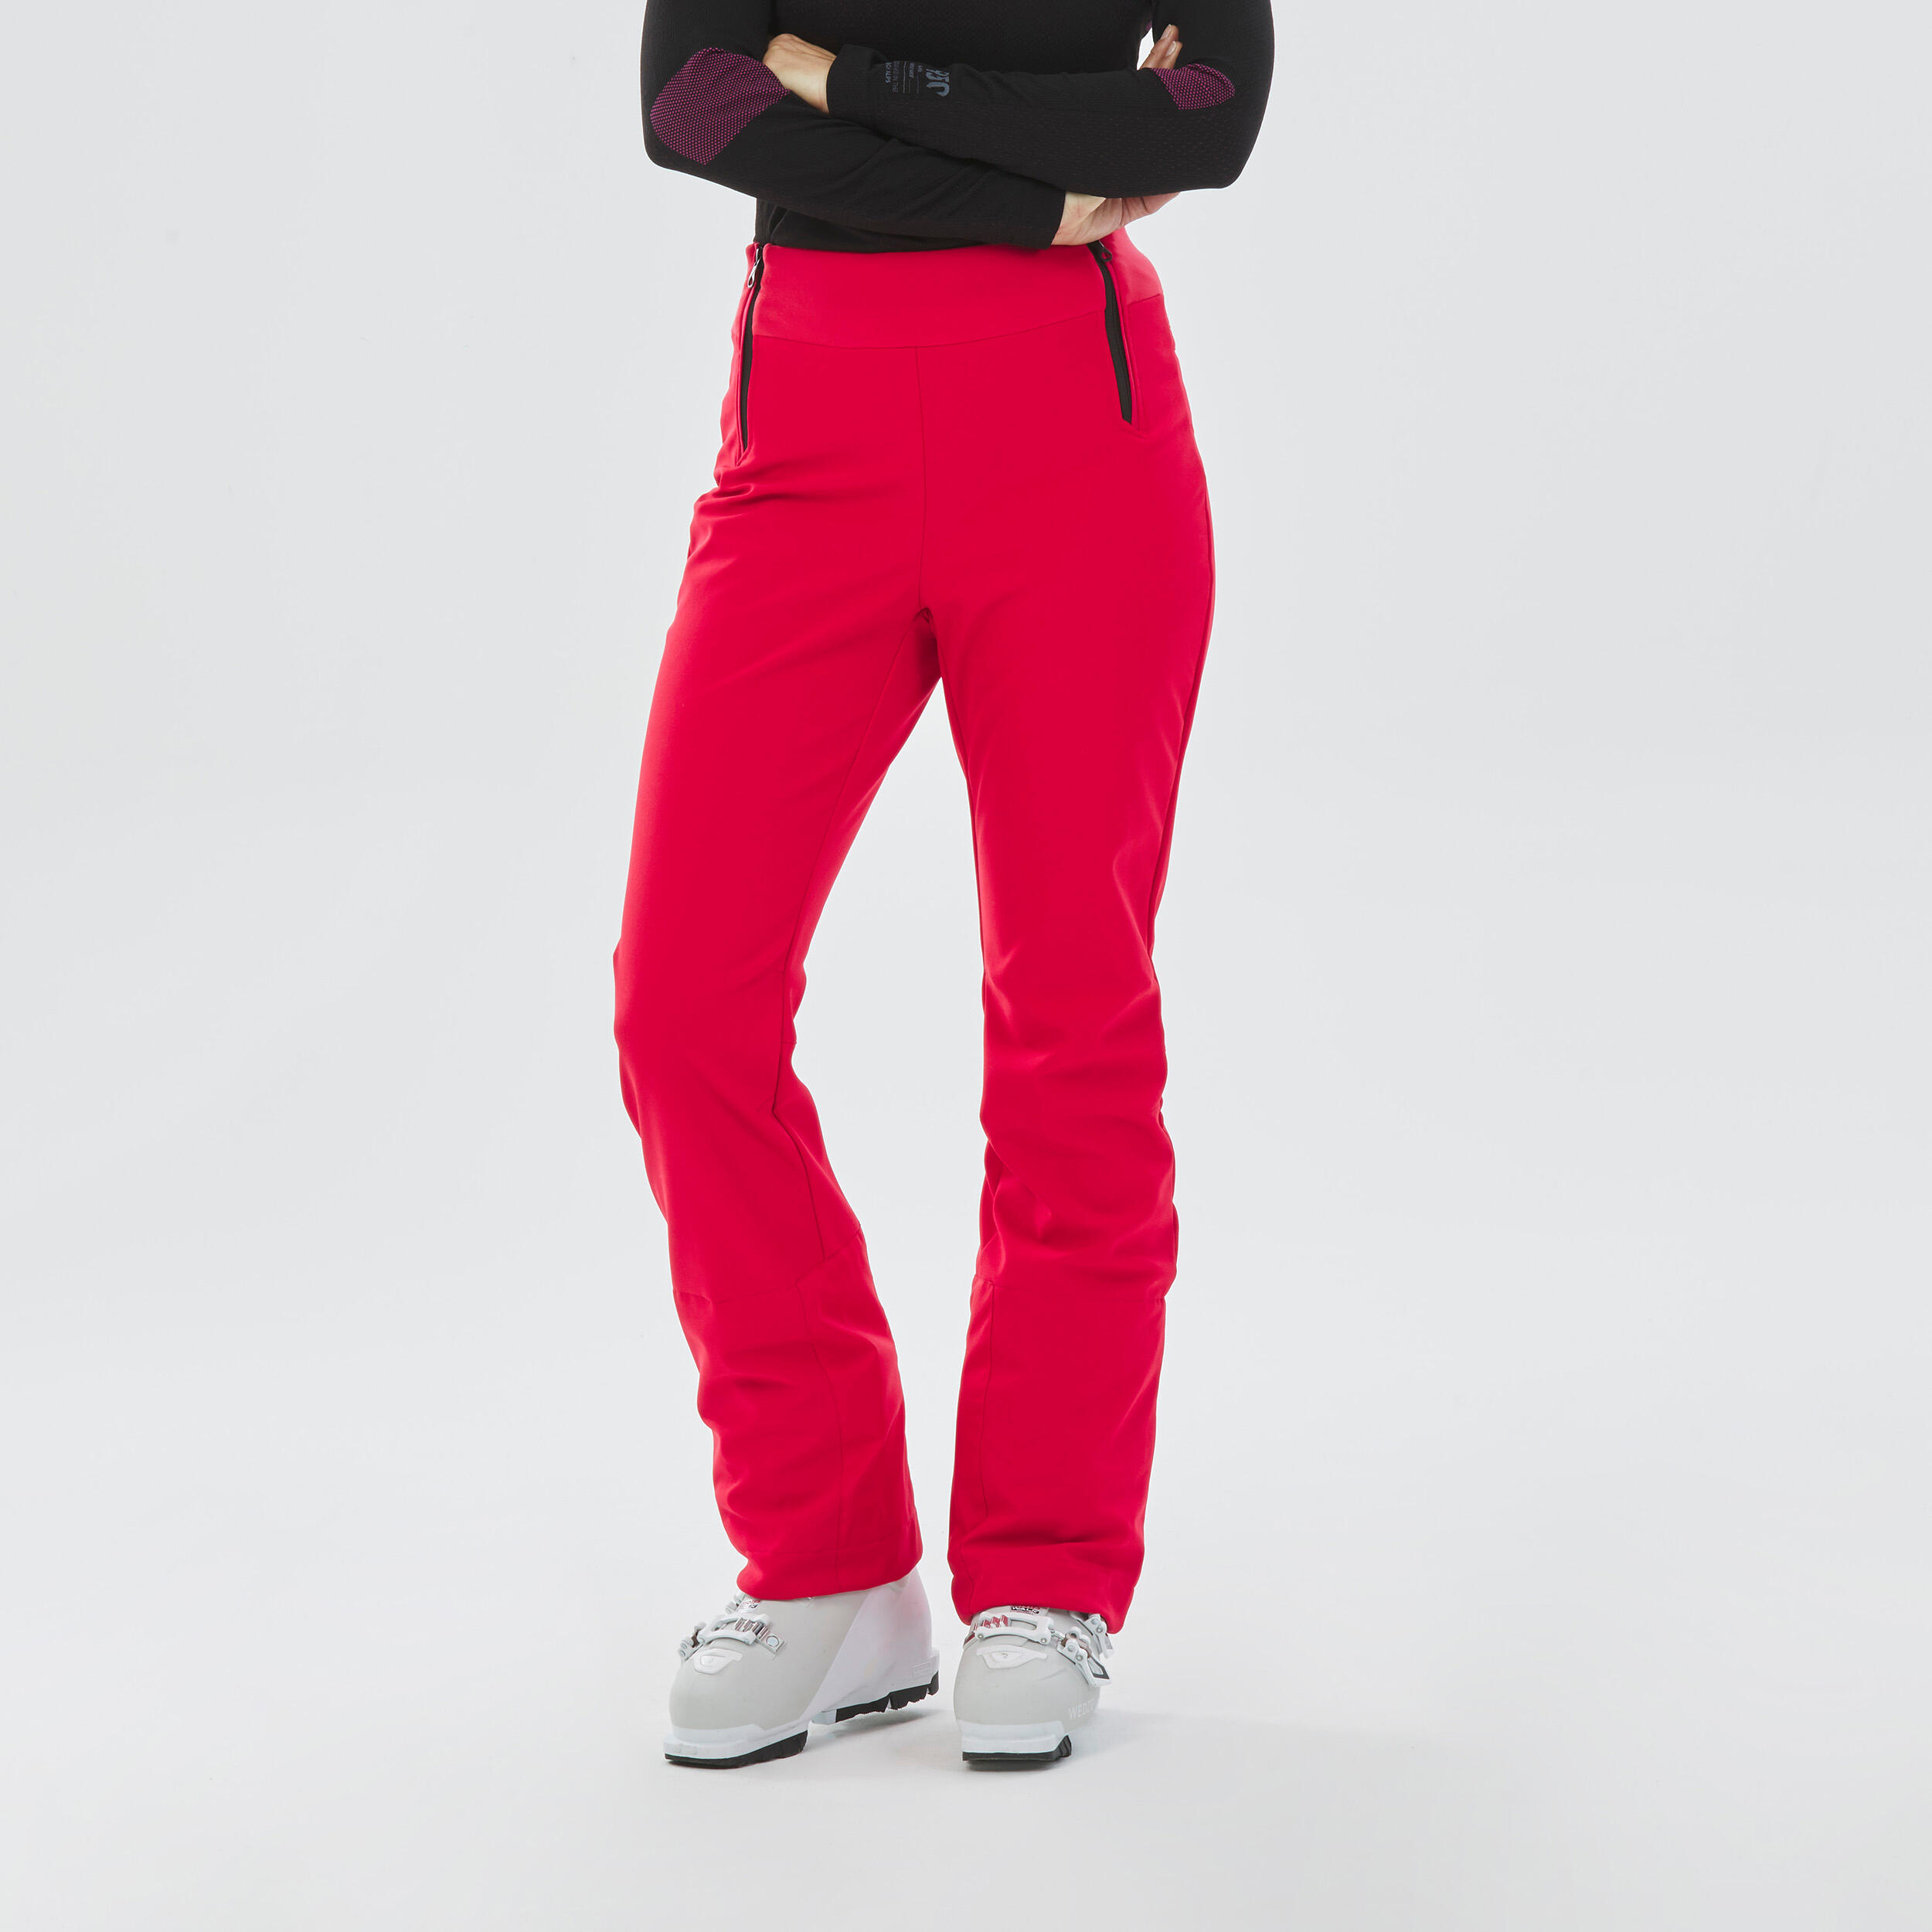 https://contents.mediadecathlon.com/p2291154/k%24ecb832c09bb7806cb4ab520f3b2c1ba4/sq/%0AWomens-Ski-Trousers-500-Slim-Red.jpg